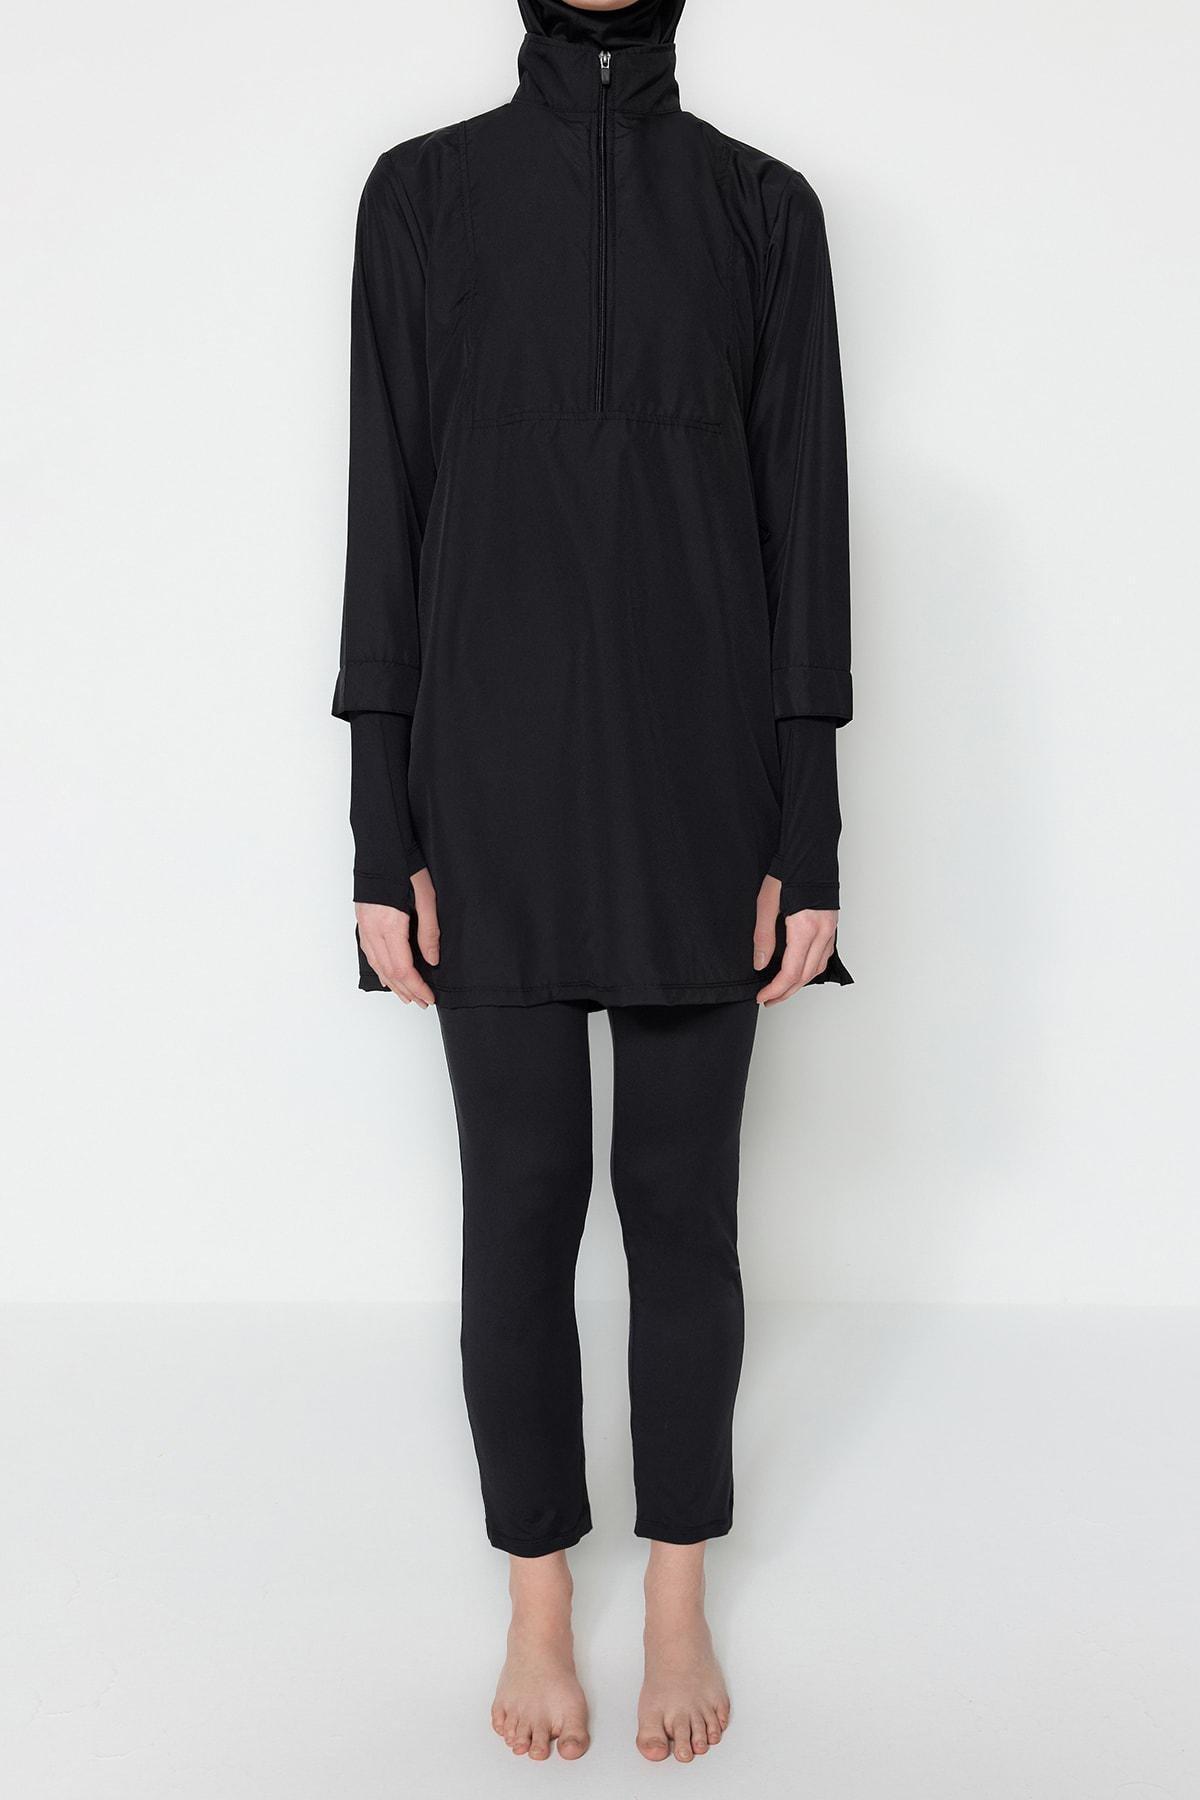 Trendyol - Black Performance Knitted Burkini Set